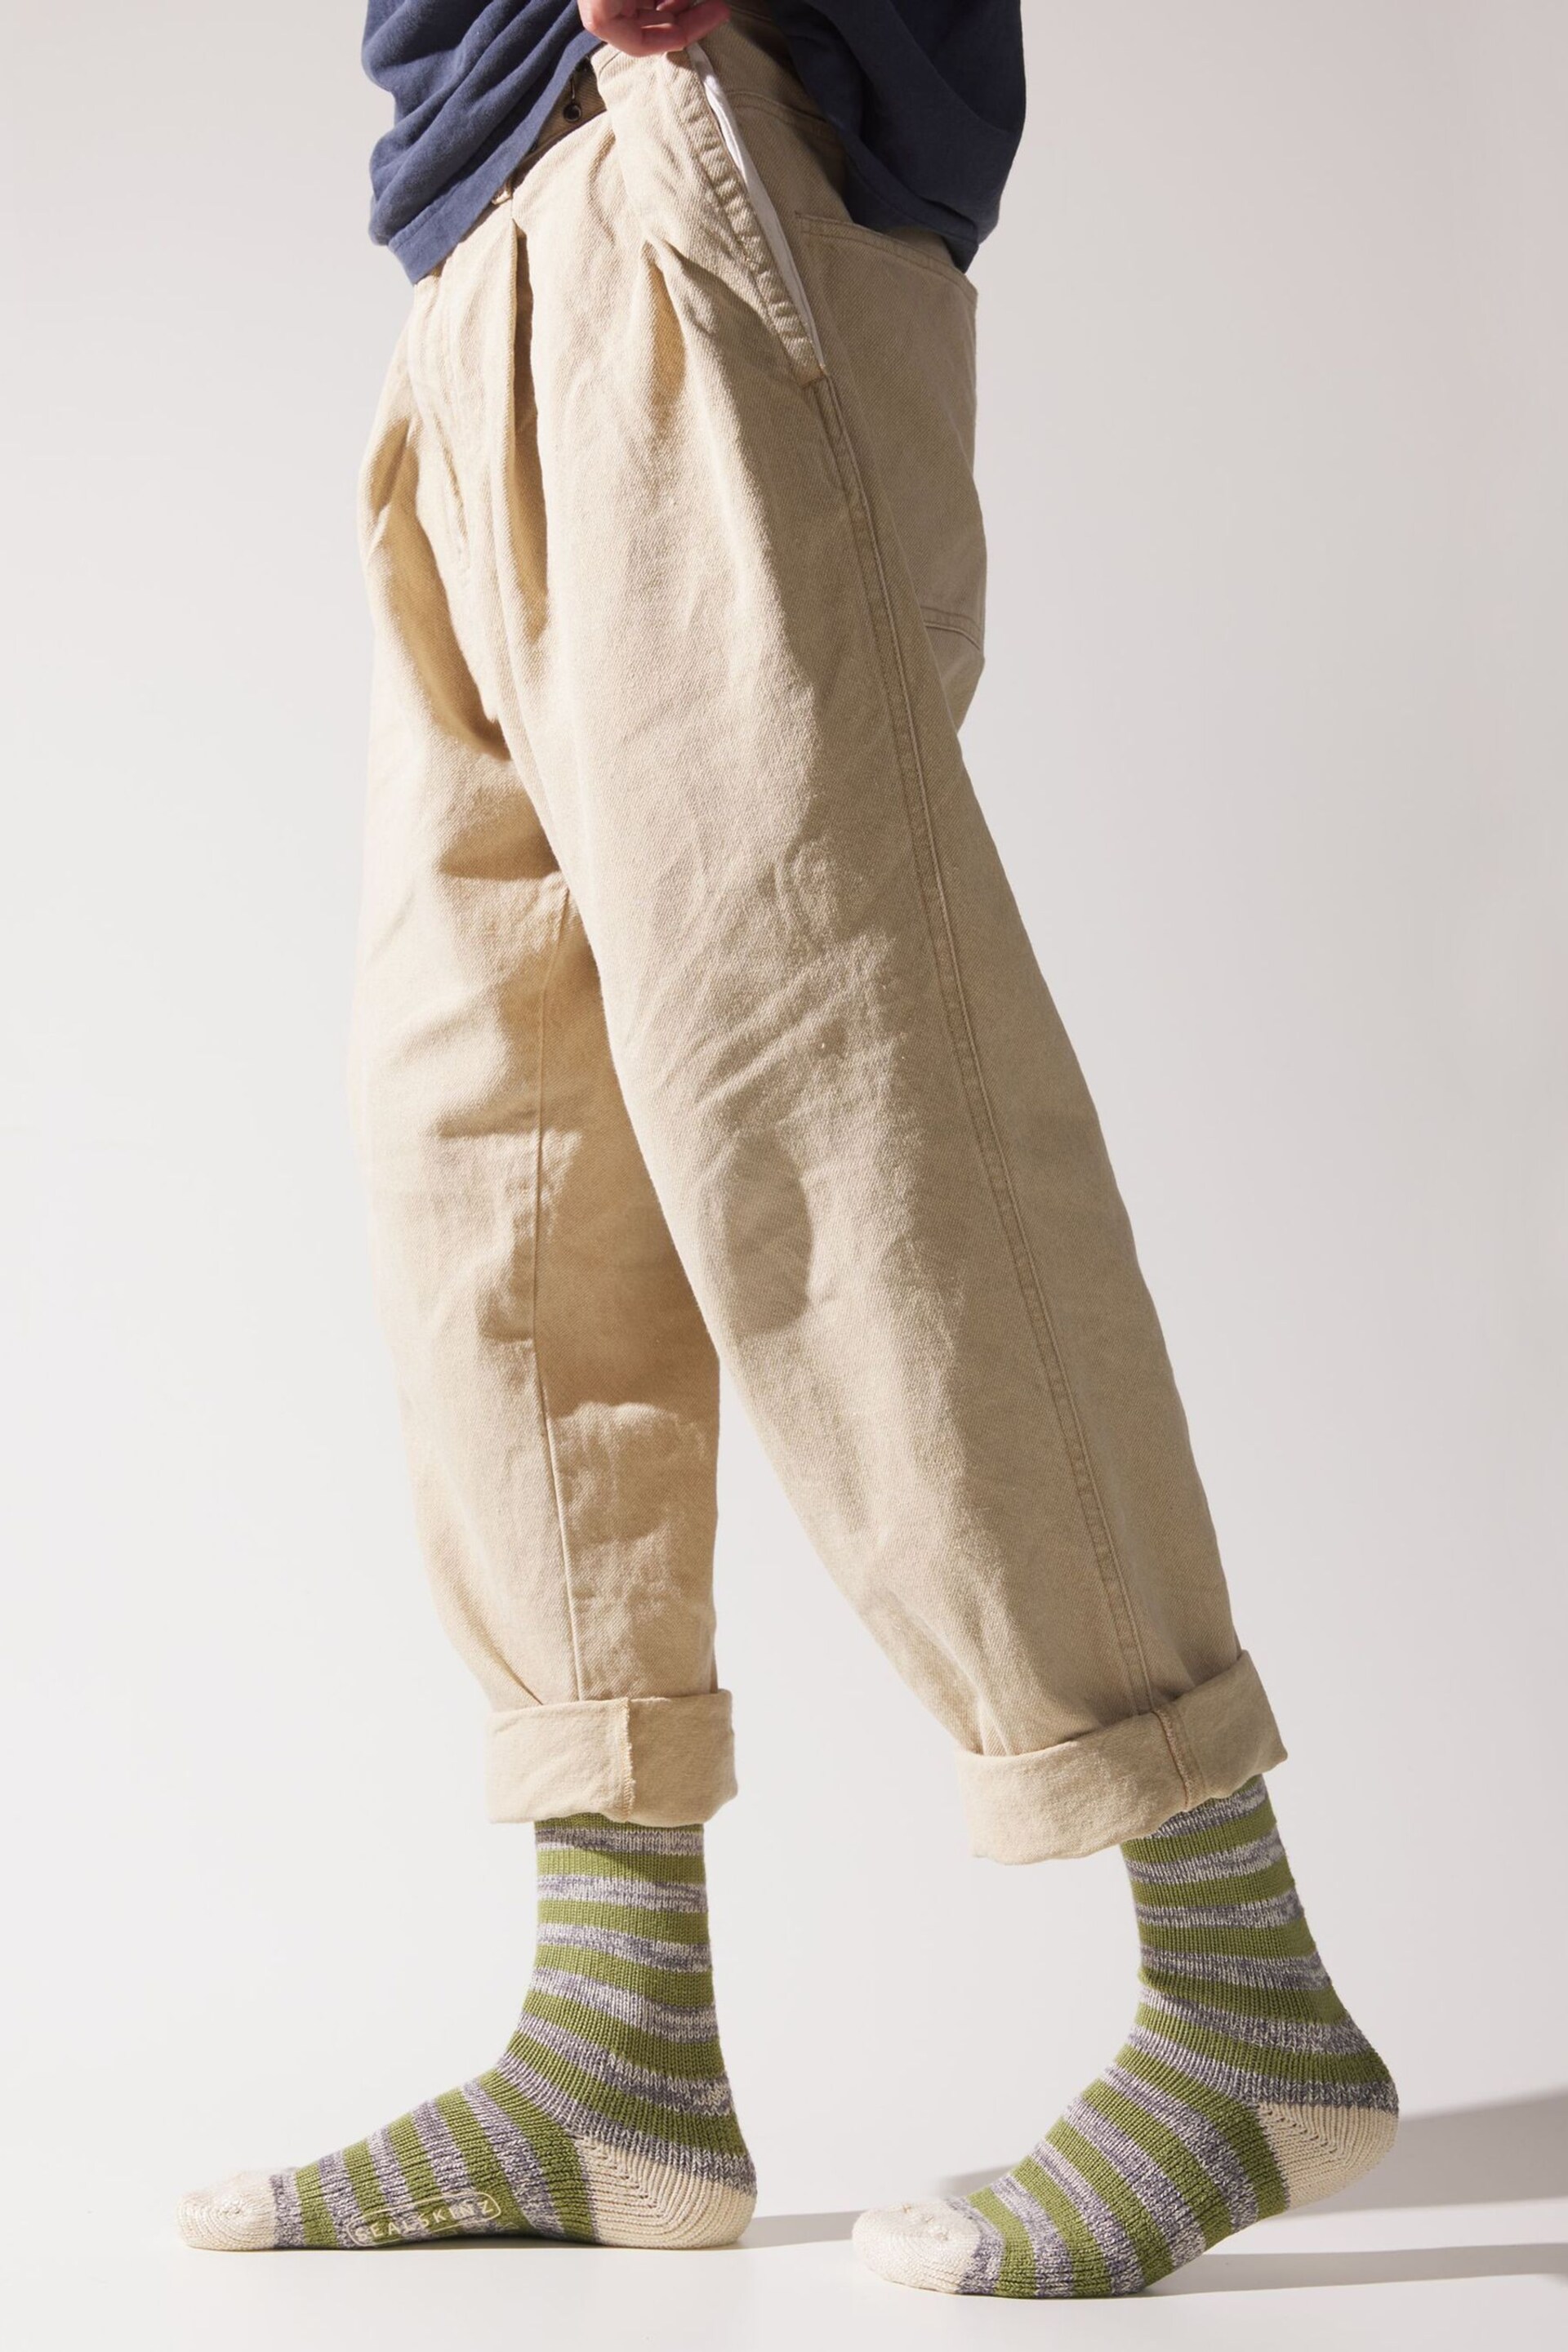 Sealskinz Womens Banham Bamboo Mid Length Striped Socks - Image 2 of 2